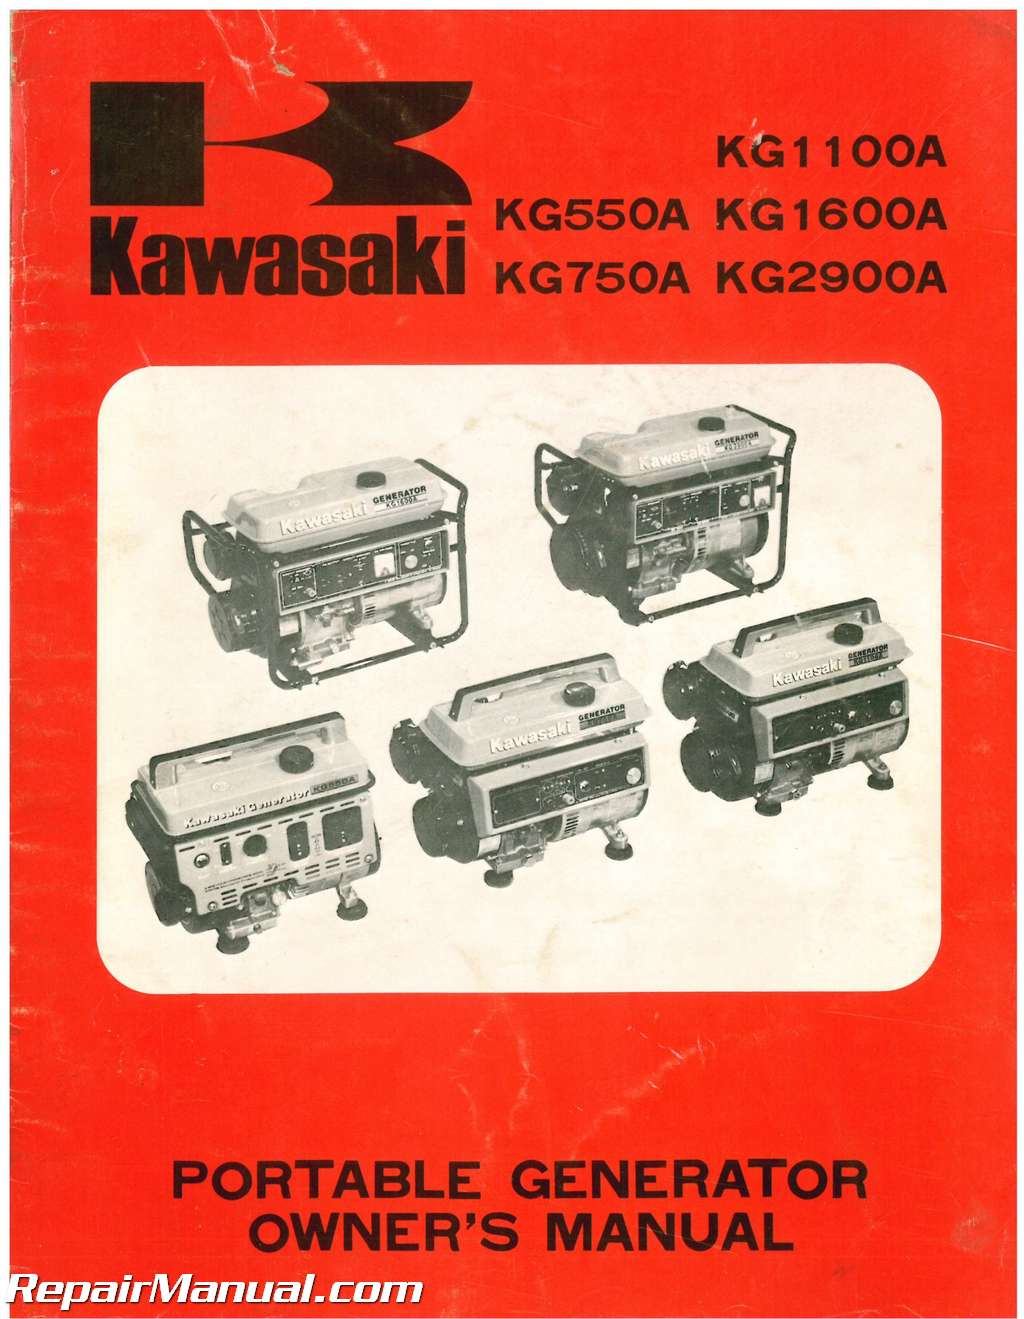 Kawasaki KG550A KG750A KG1100A KG1600A KG2900A Portable Generator Owners Manual 001